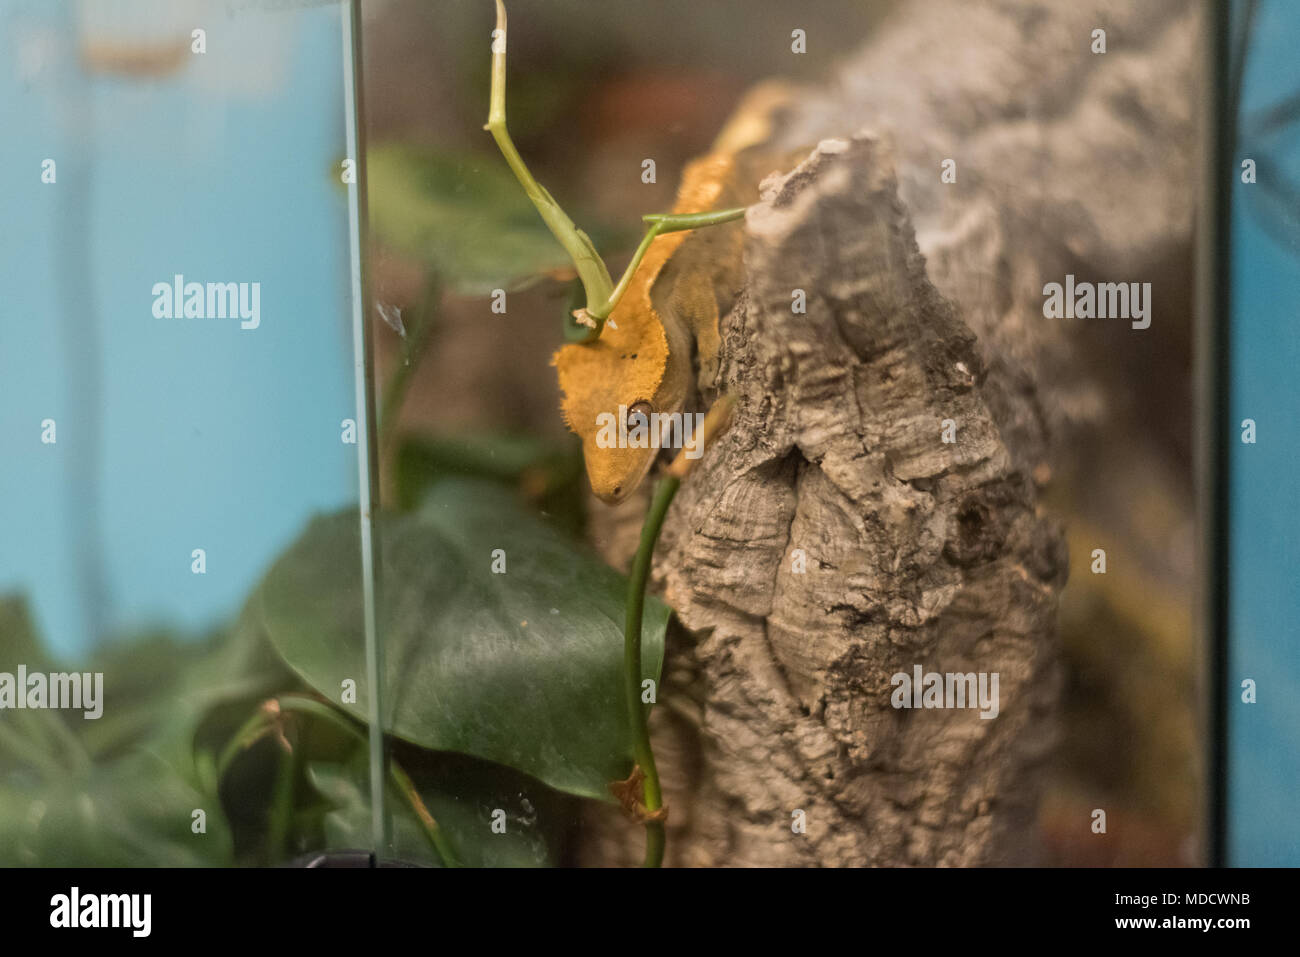 Juvenile Crested or Eyelash Gecko in a vivarium crawling on a cork log Stock Photo